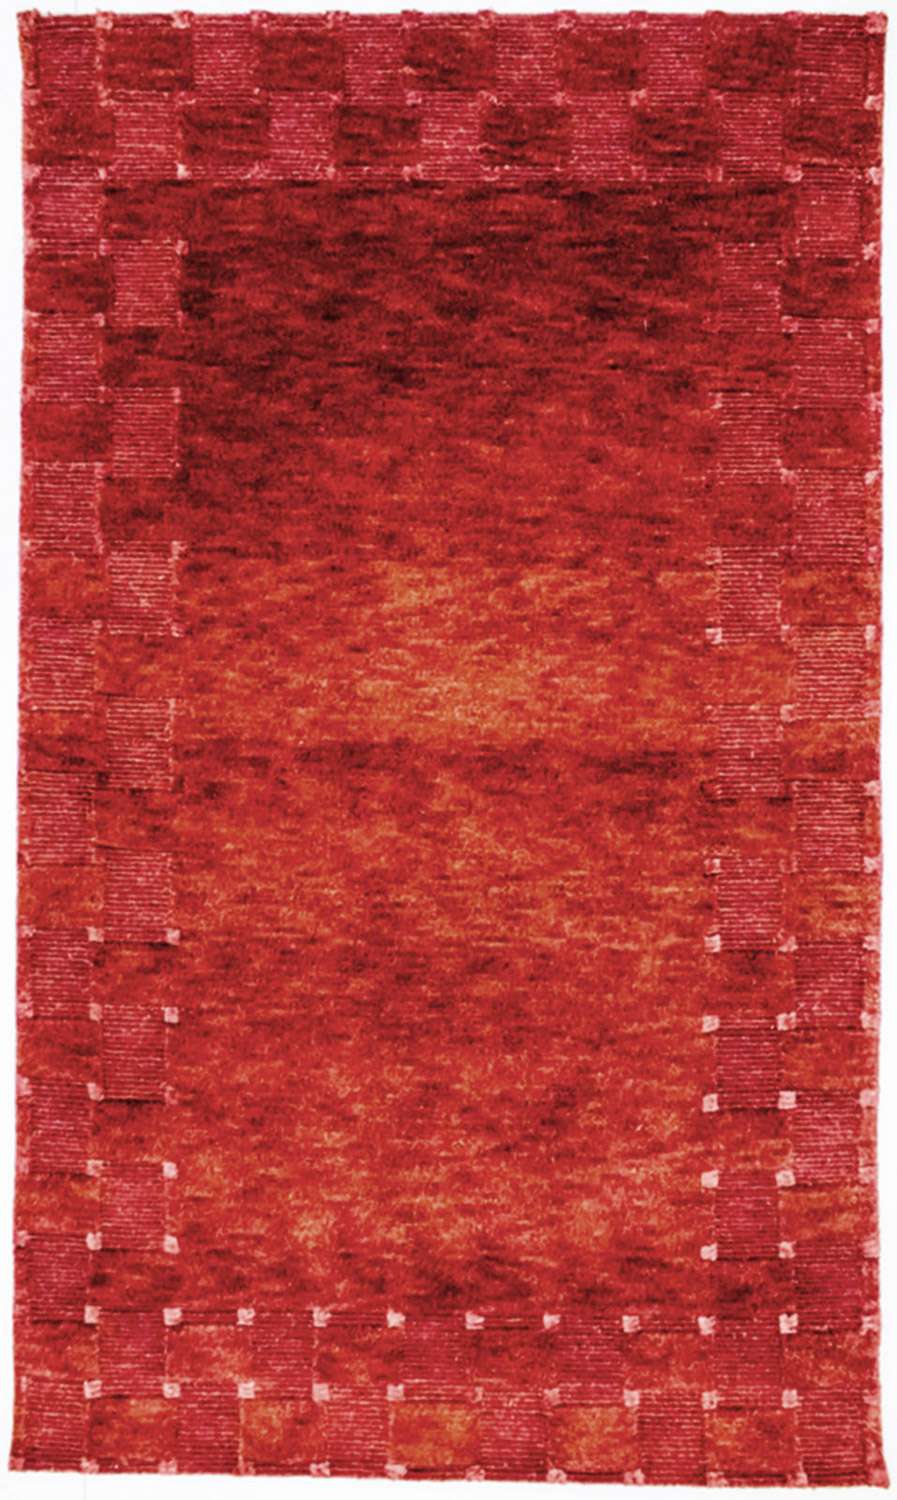 Nepal Rug - 150 x 92 cm - red